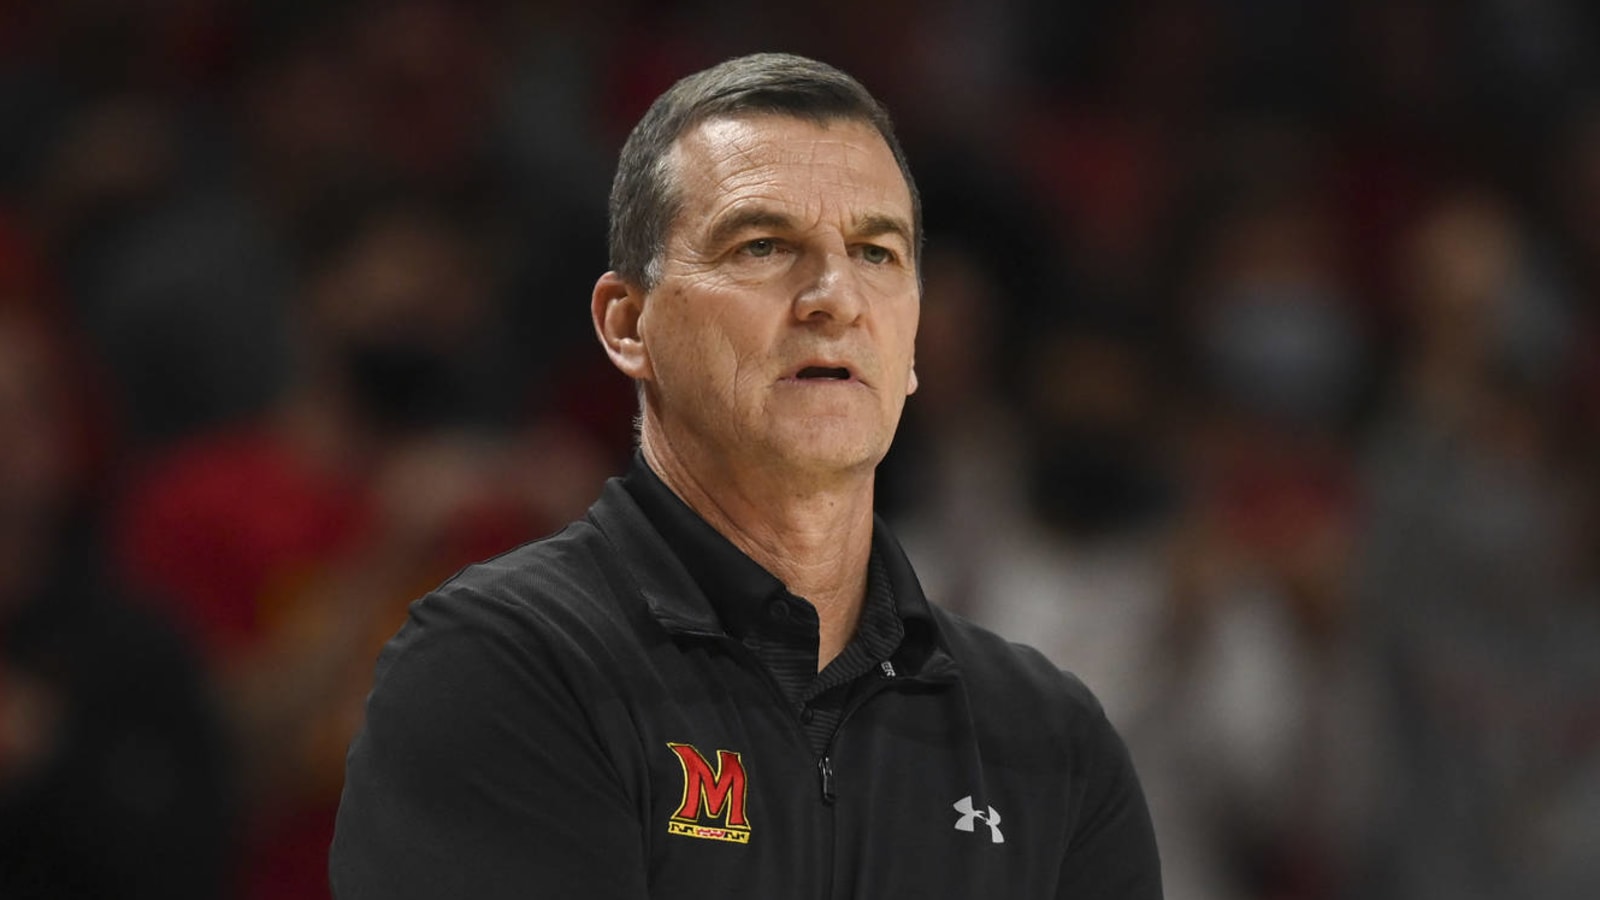 Mark Turgeon steps down as Maryland head coach